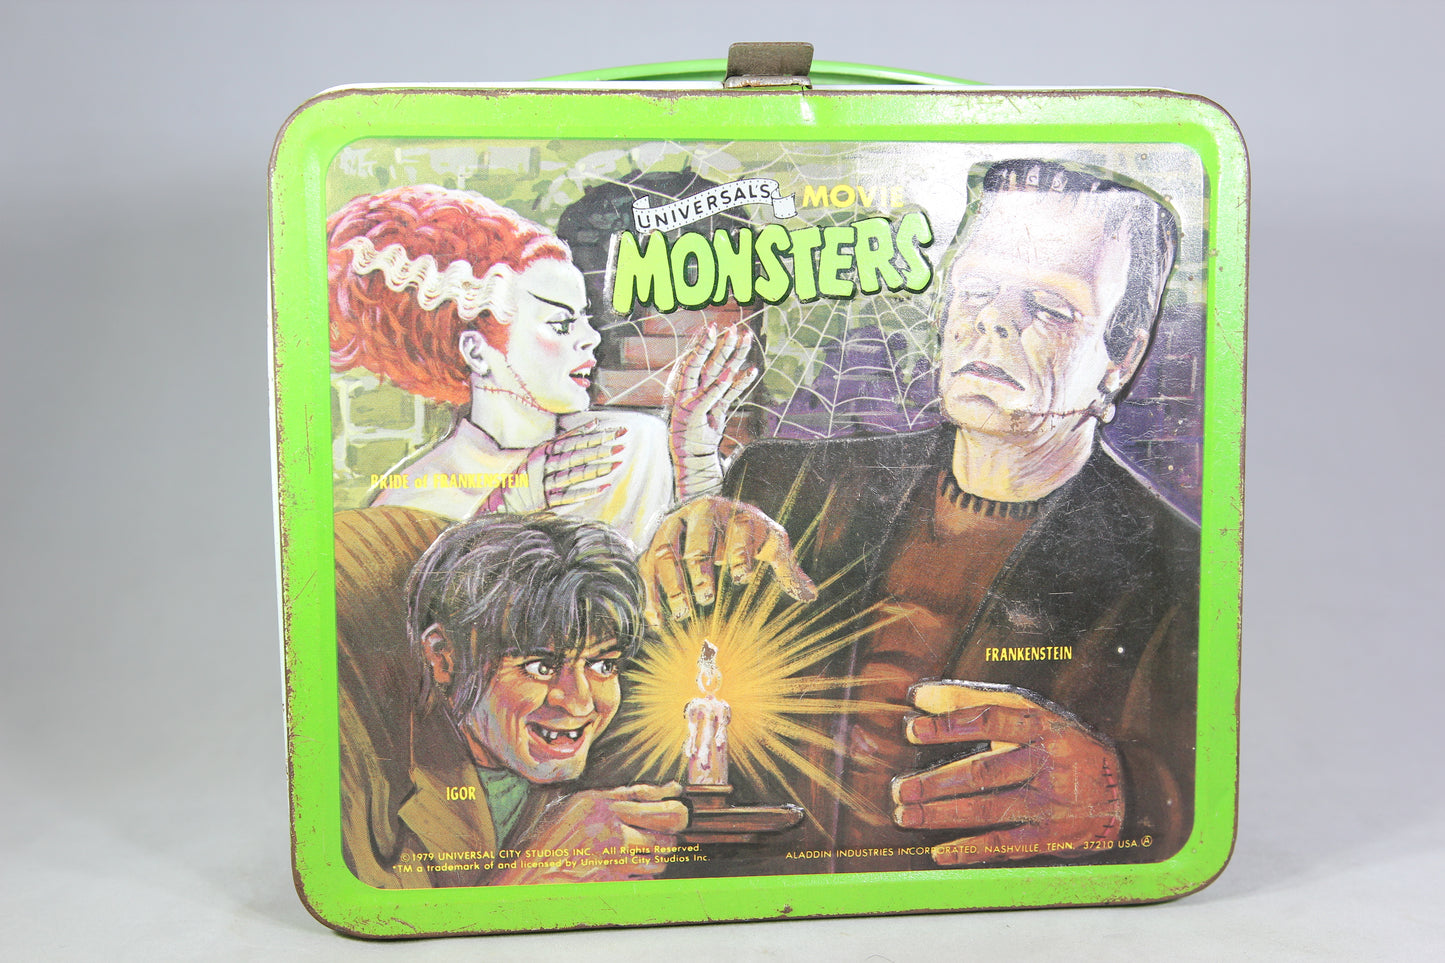 Universal Movie Monsters Aladdin Brand Metal Lunchbox, 1979